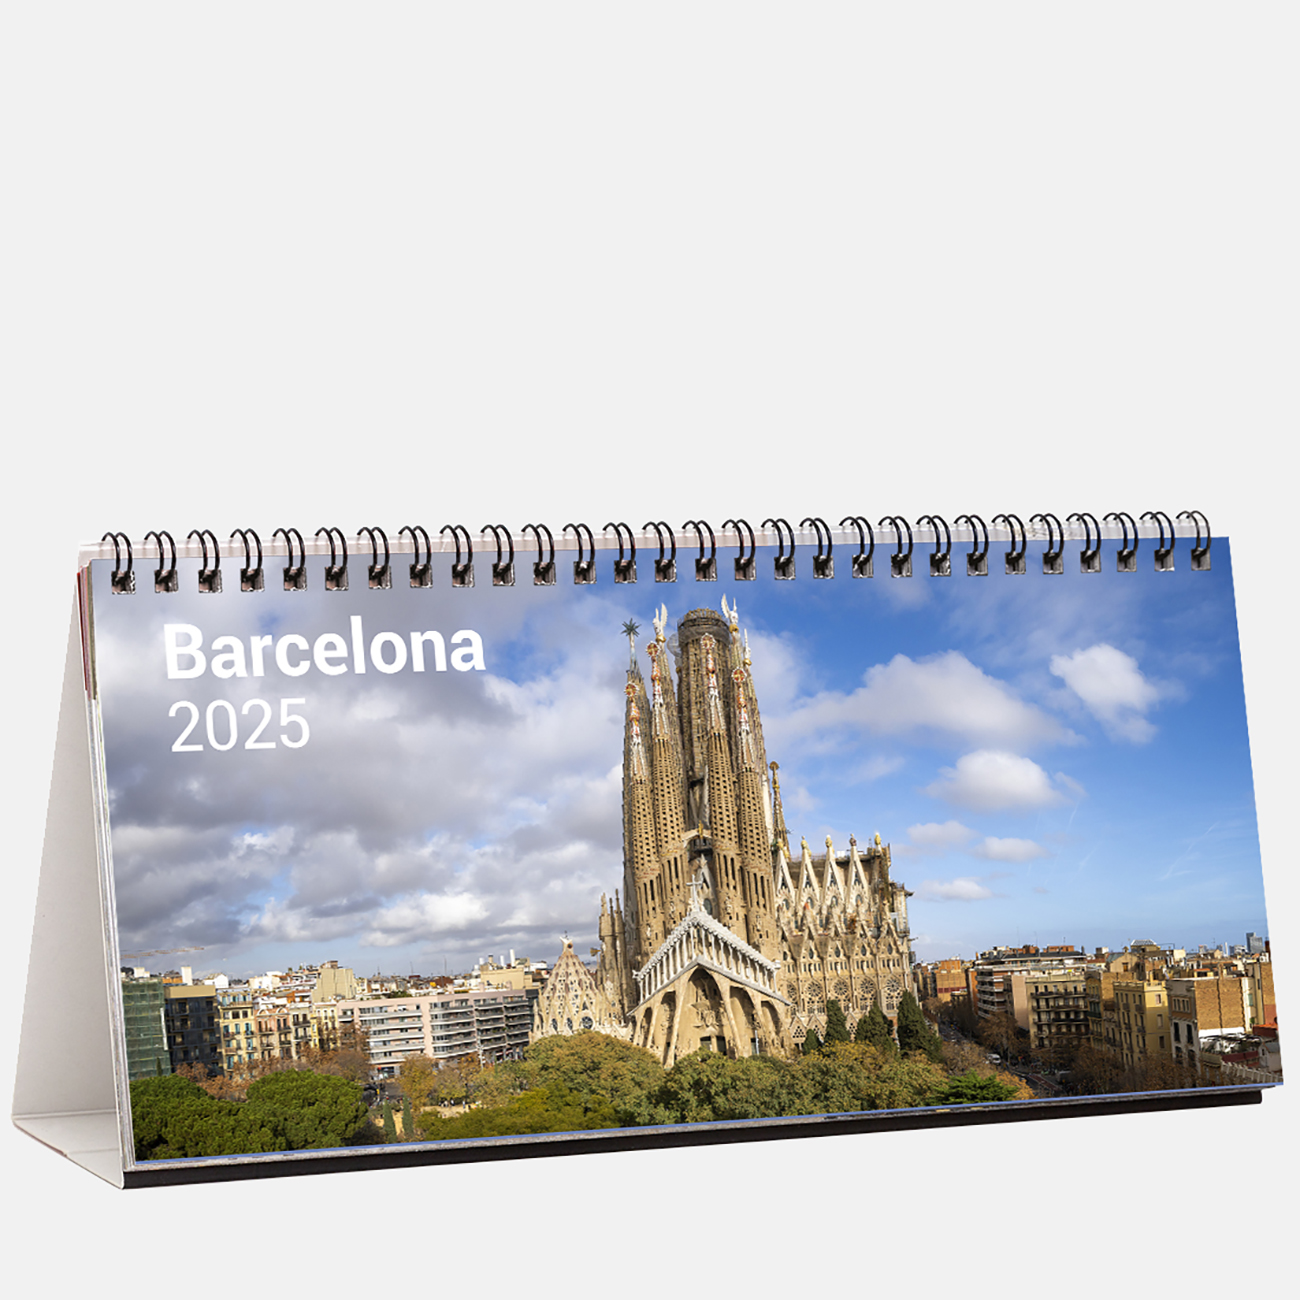 Calendrier 2025 Barcelona s25b calendario sobremesa panoramico 2025 barcelona